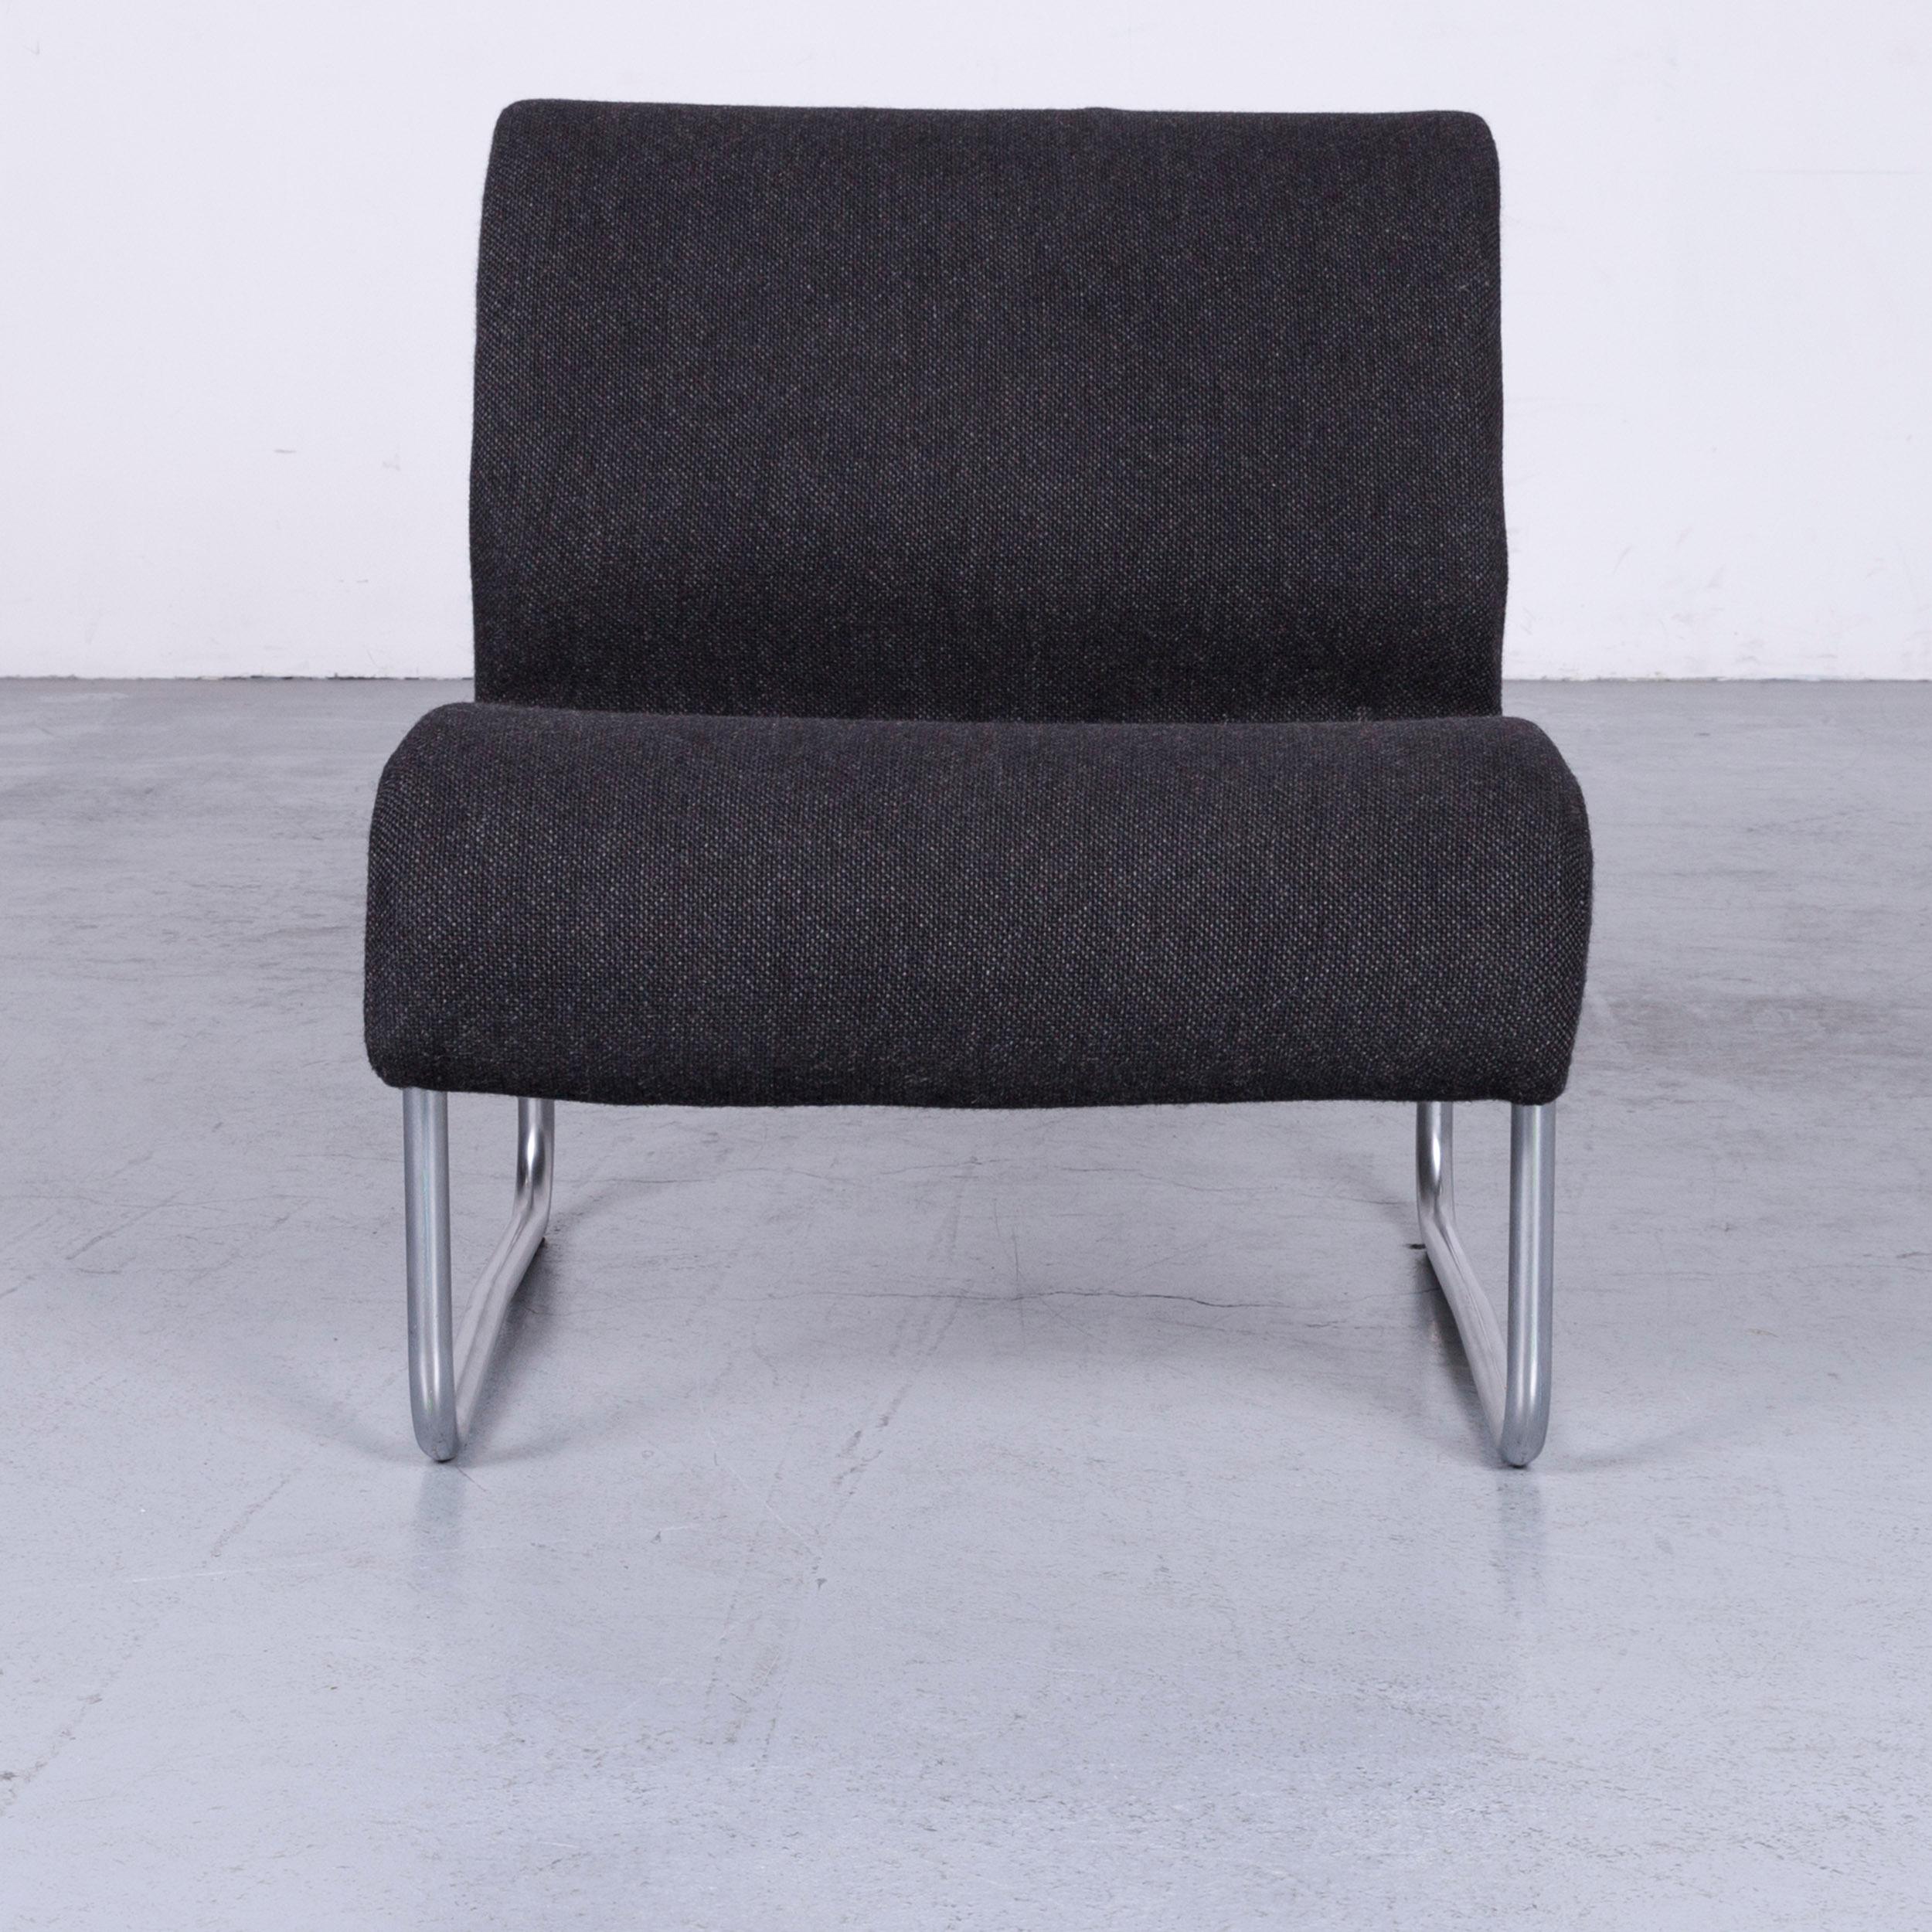 Grey colored original Fröscher Sitform designer chair, designed by Jürgen Lange, in a minimalistic and modern design.